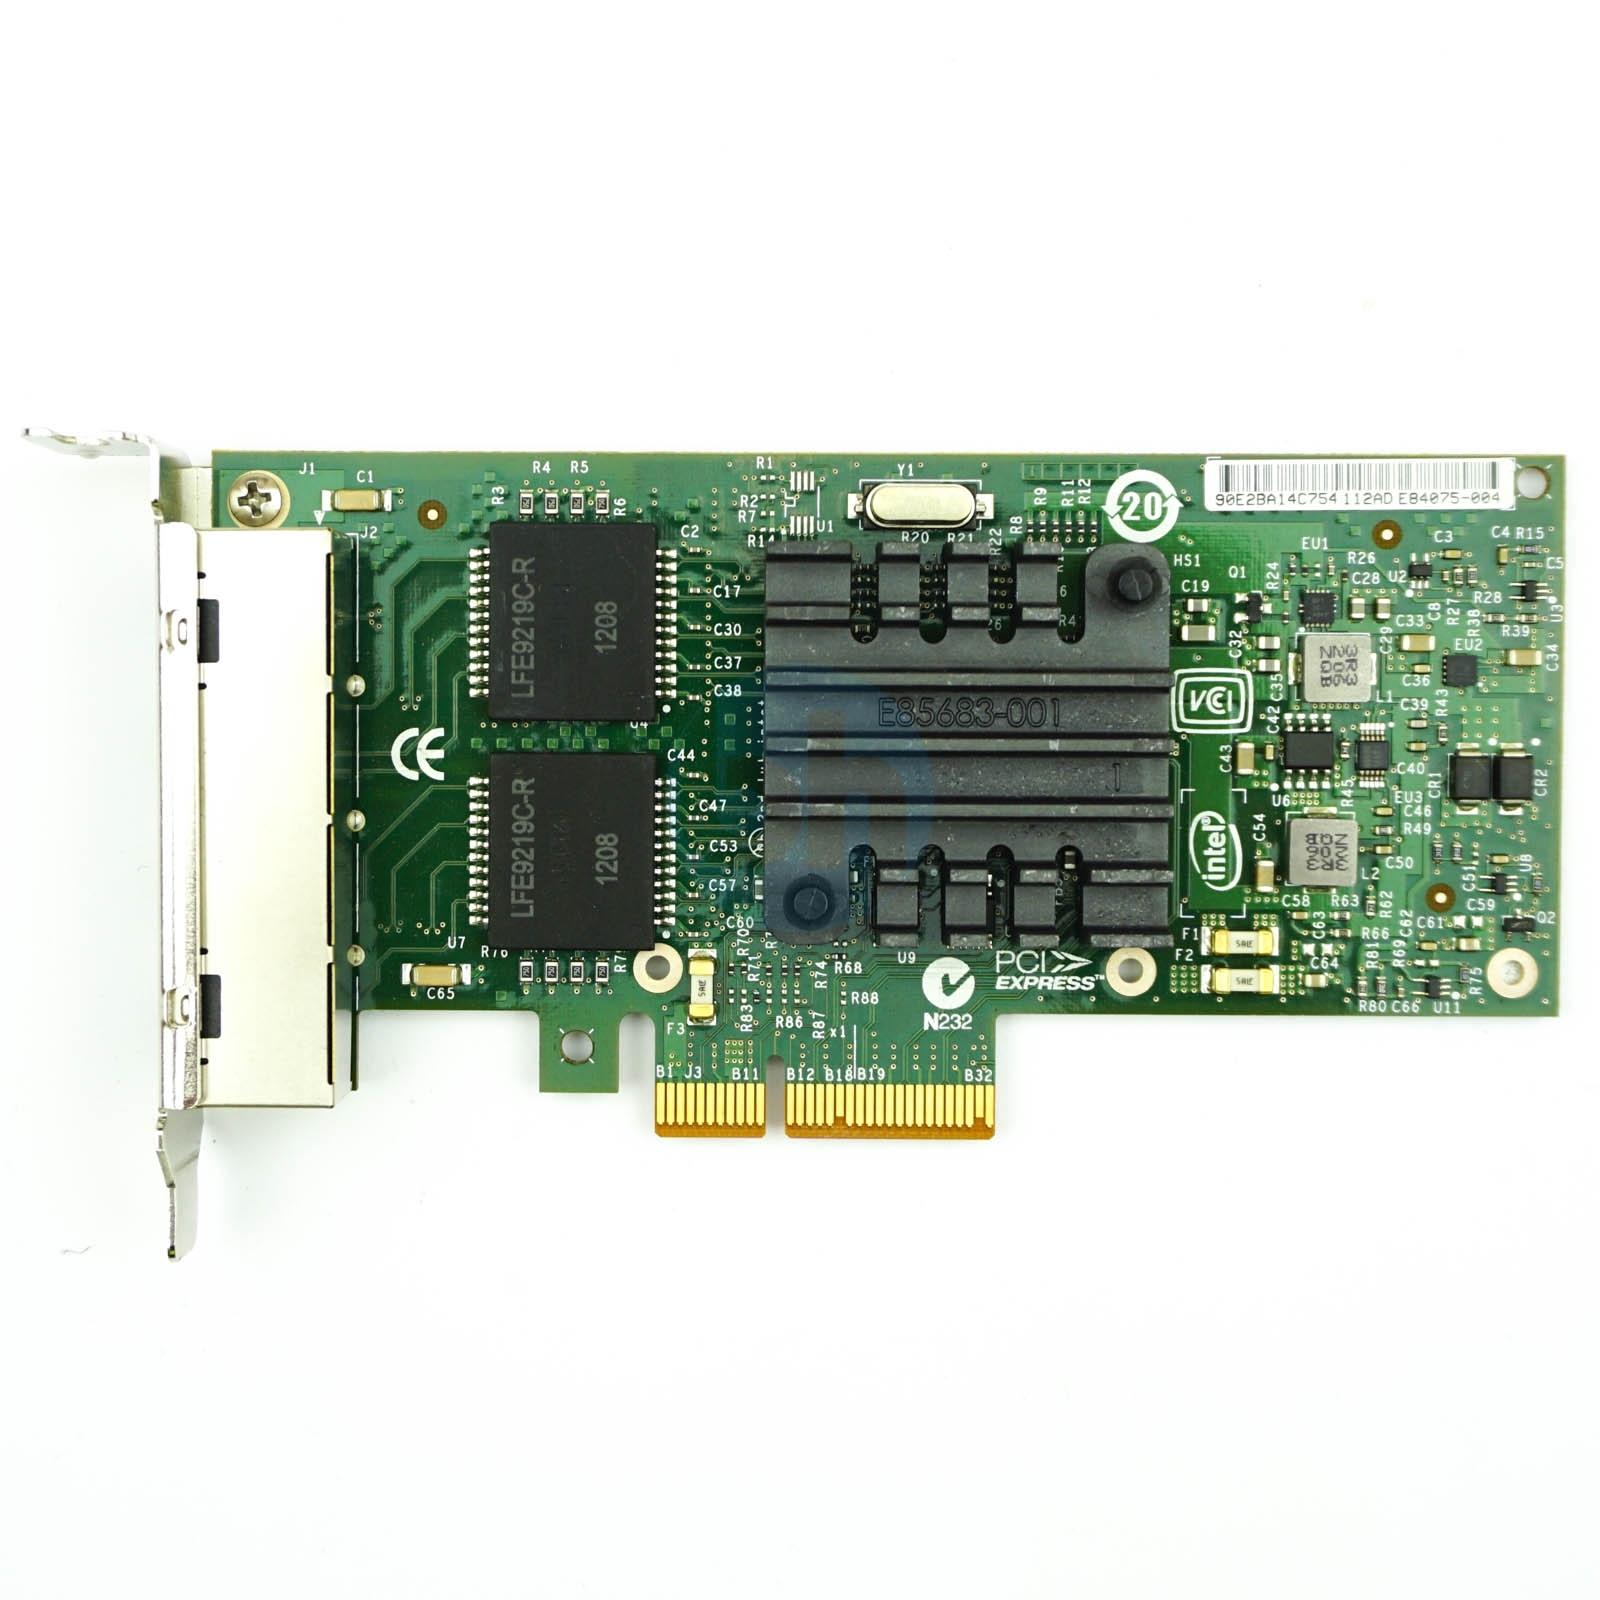 Intel I340-T4 Quad Port RJ45 - 1Gbps Low Profile PCIe-x4 NIC